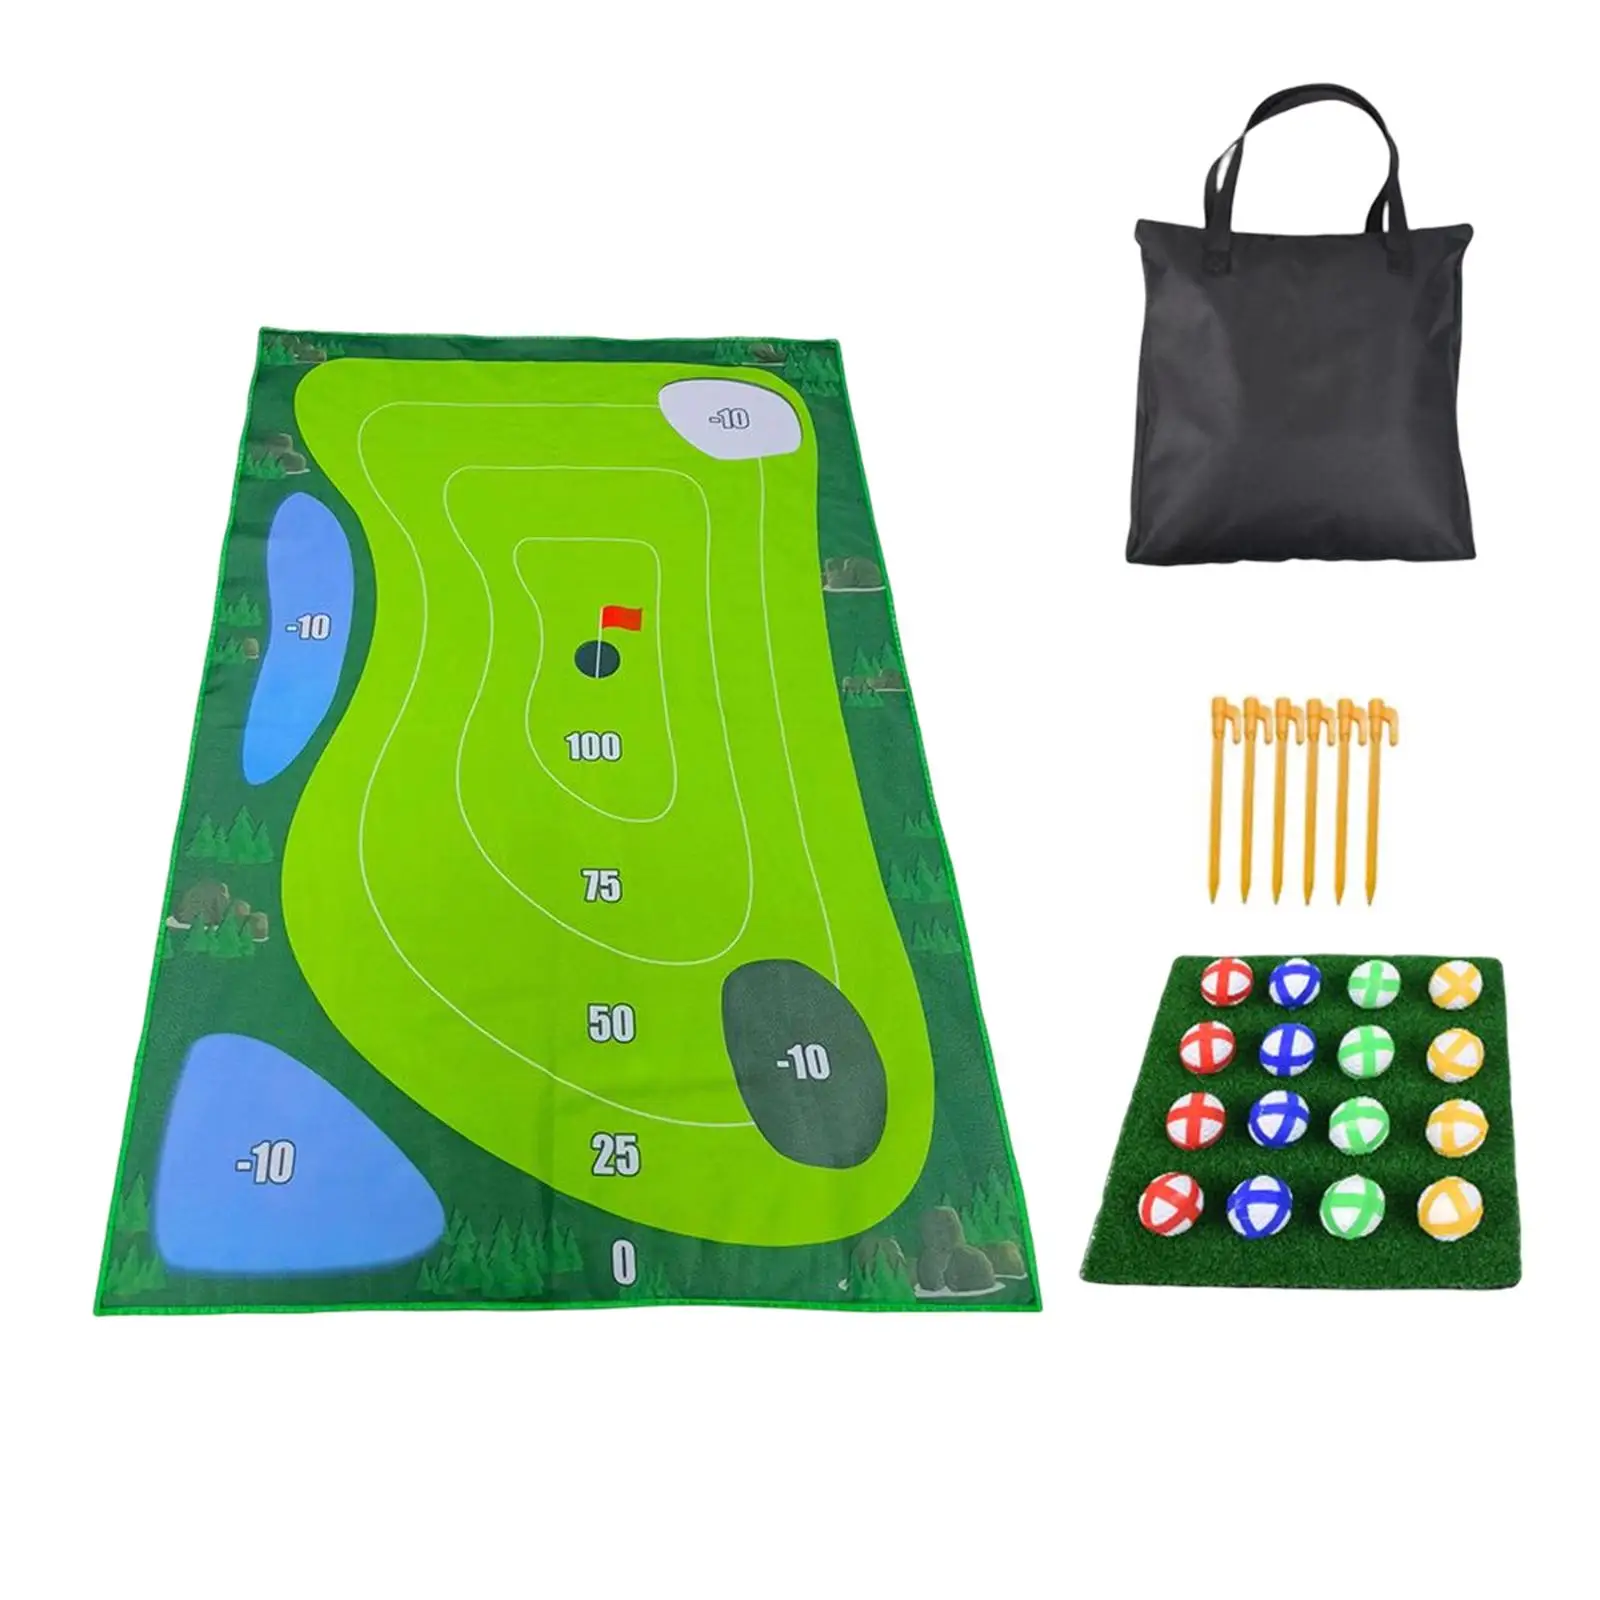 Casual Golf Game Set with Balls Hitting Mat Golf Putting Golf Training Equipment